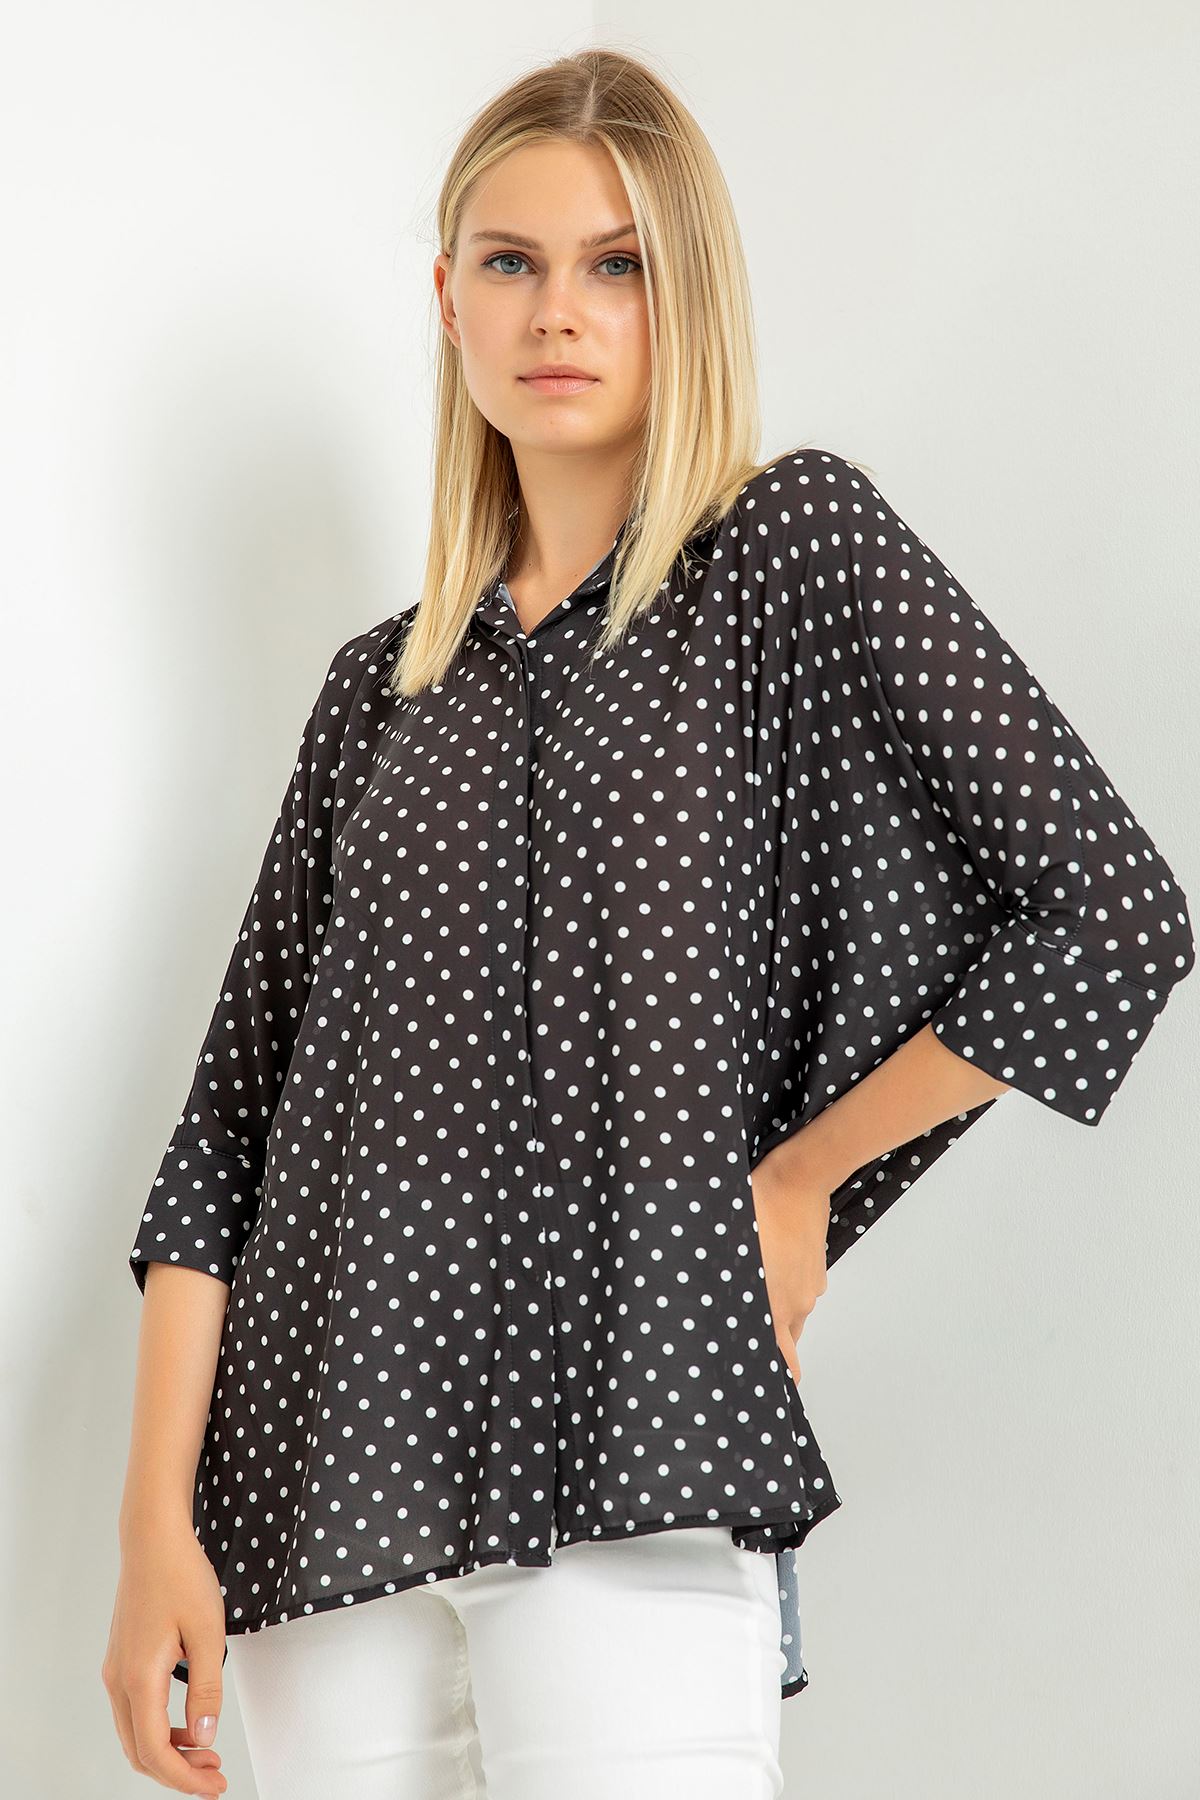 Jesica Fabric Wide Below Hip Oversize Polka-Dot Print Women'S Shirt - Black